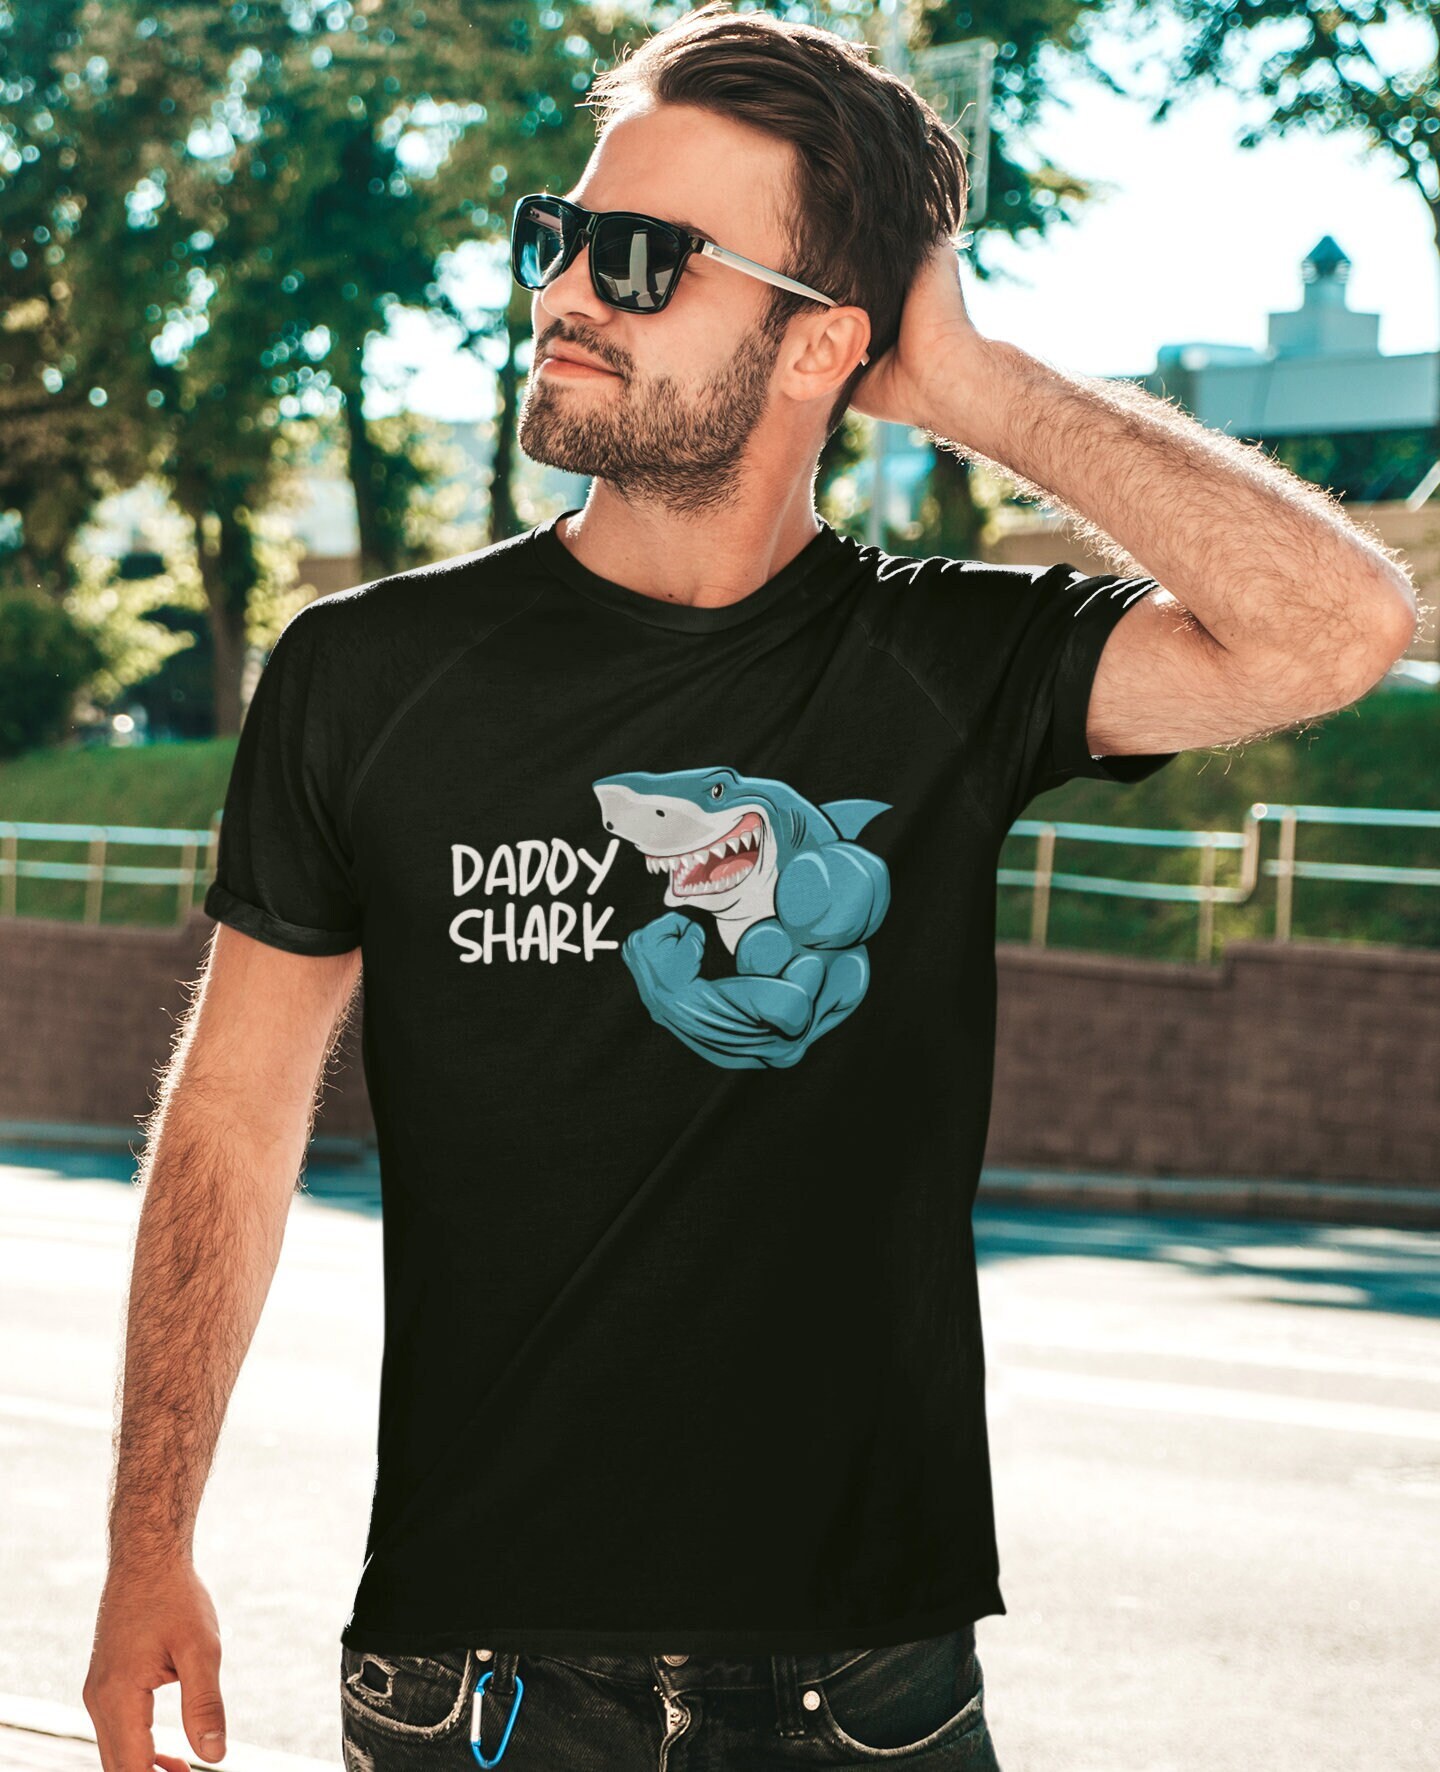 San Jose Sharks T-Shirts for Sale